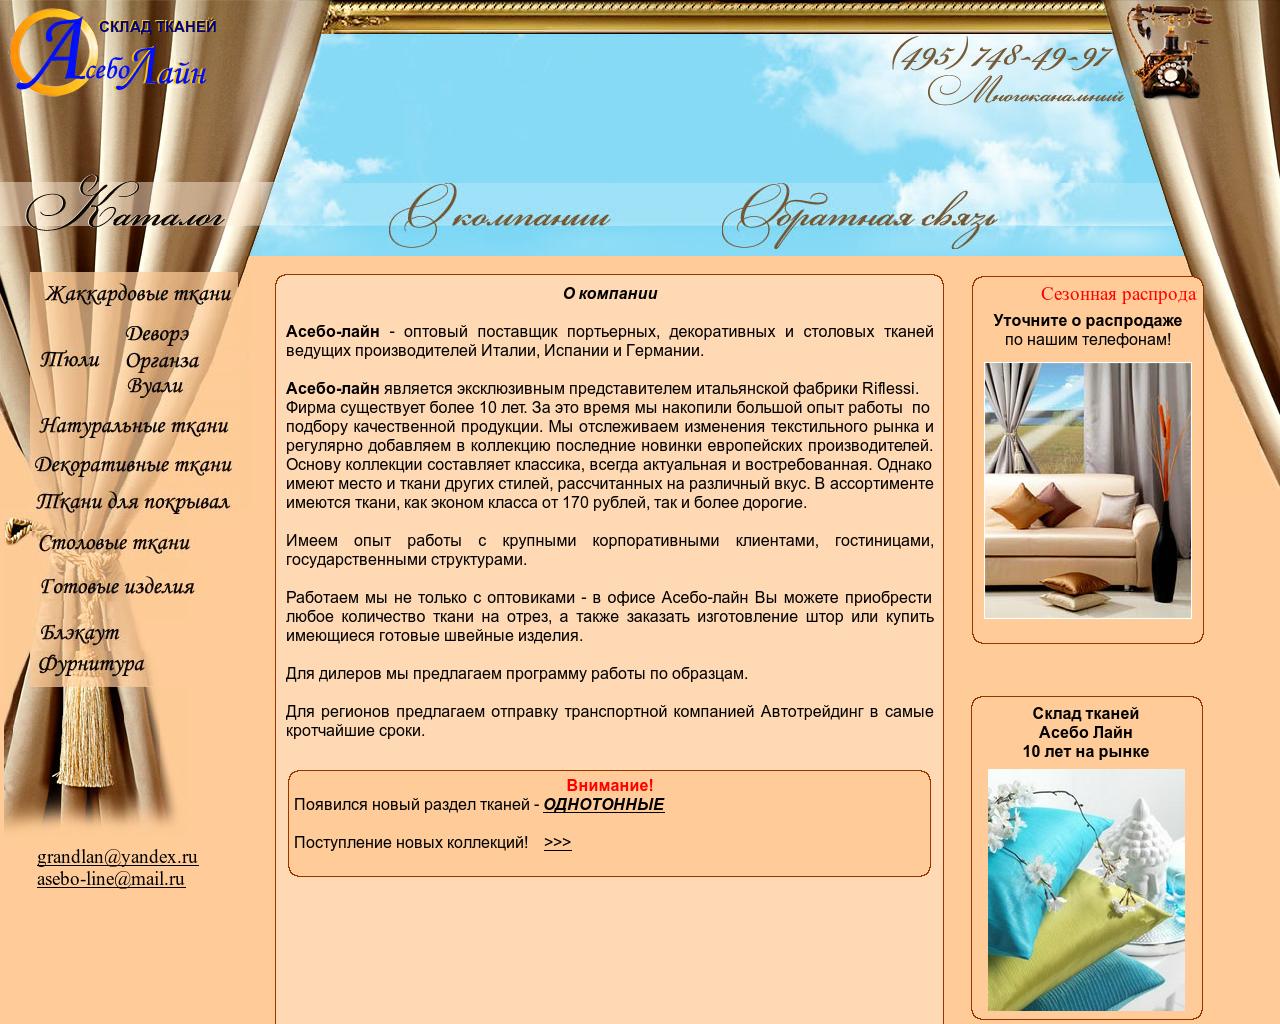 Изображение сайта asebo.ru в разрешении 1280x1024